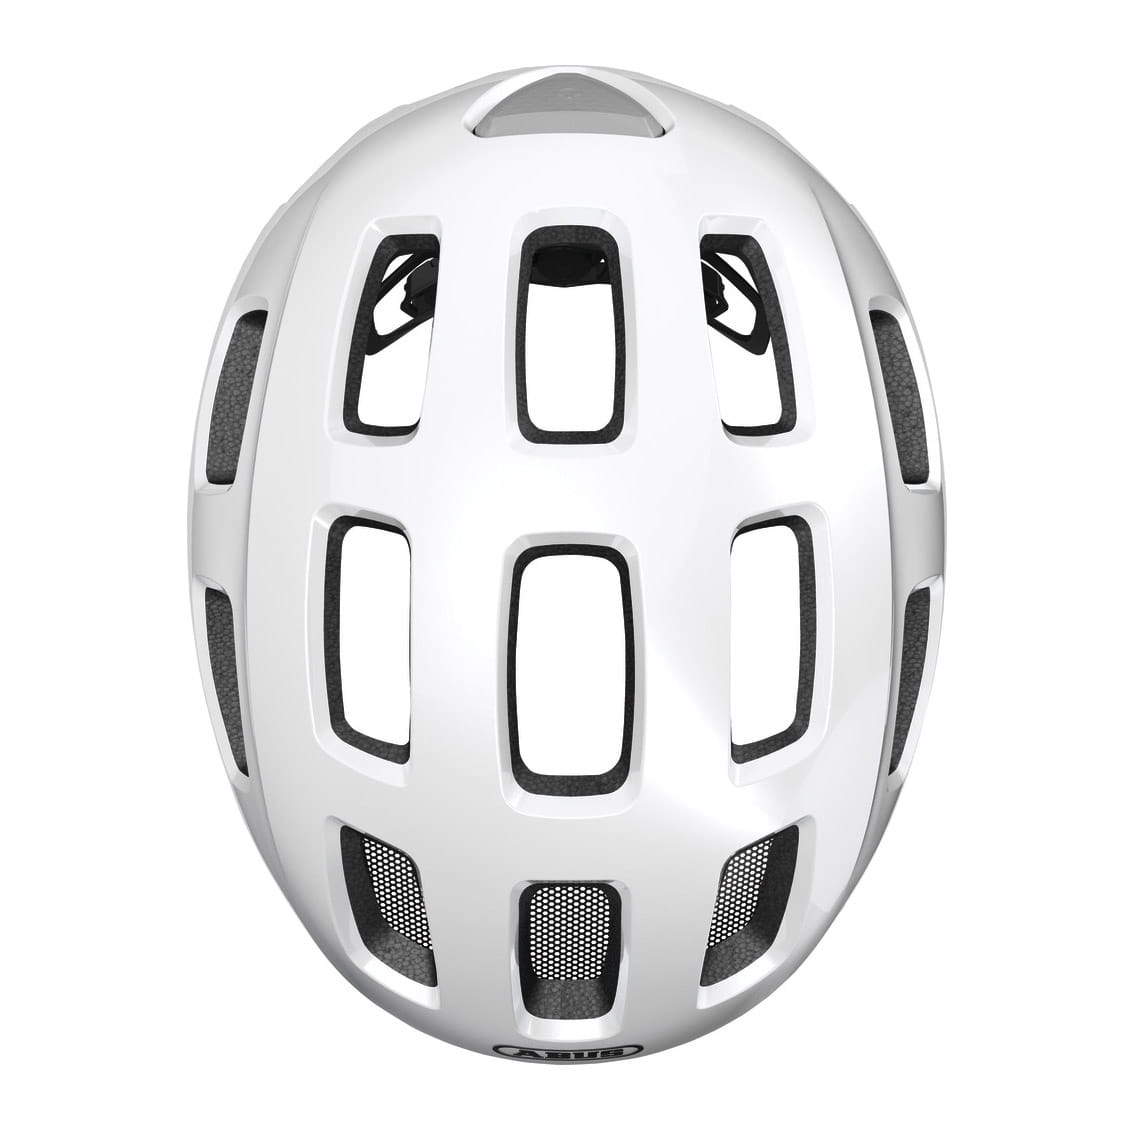 ABUS Youn-I 2.0 Bike Helmet with LED